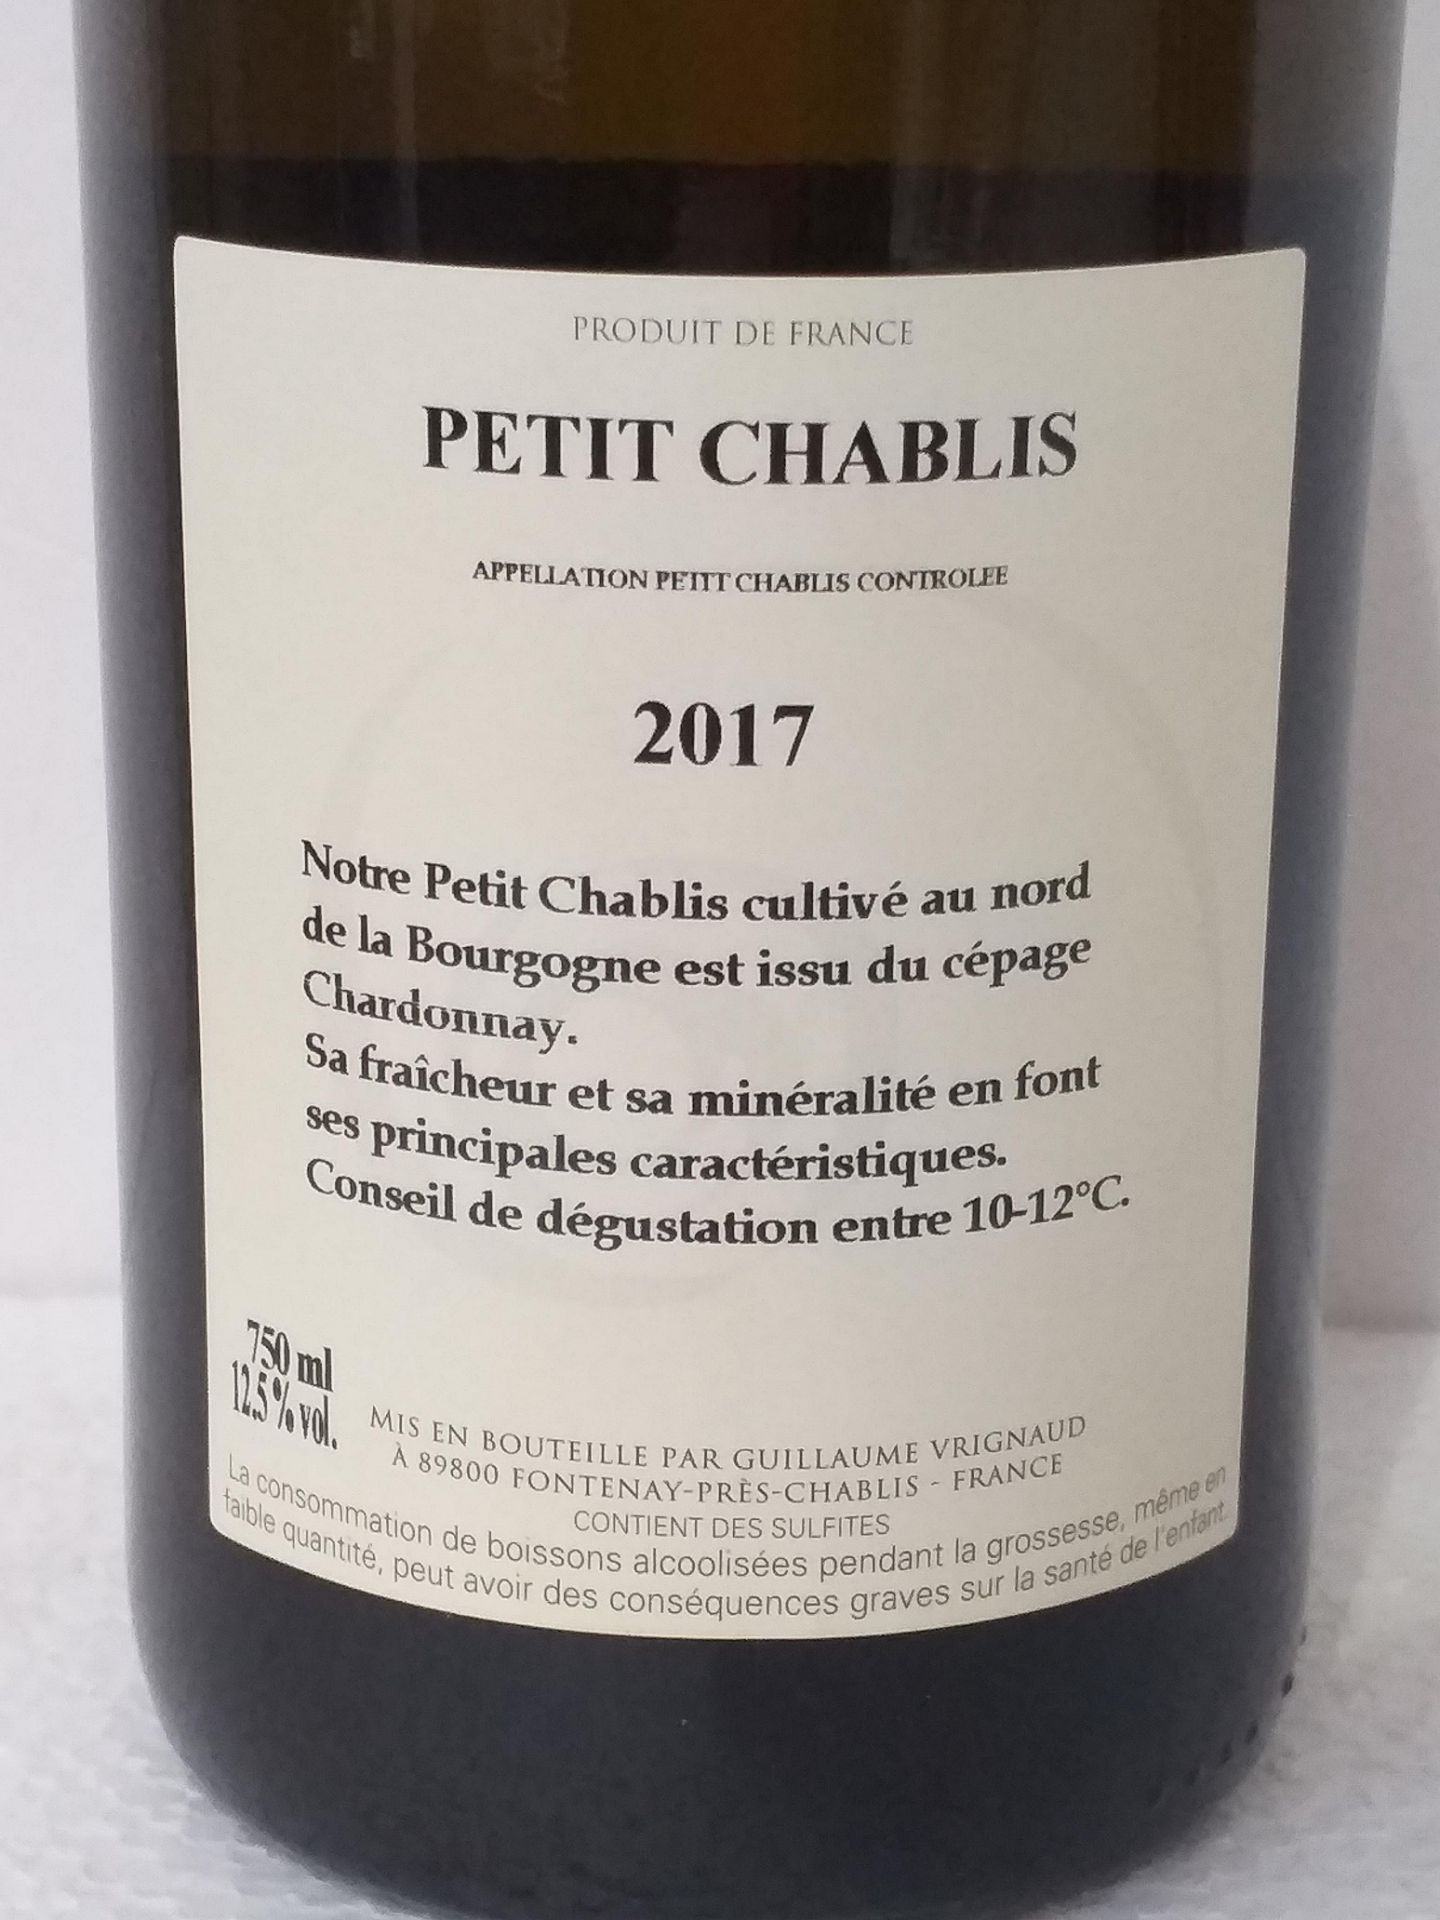 6 Bottles of Petit Chablis 2017 - Image 3 of 3